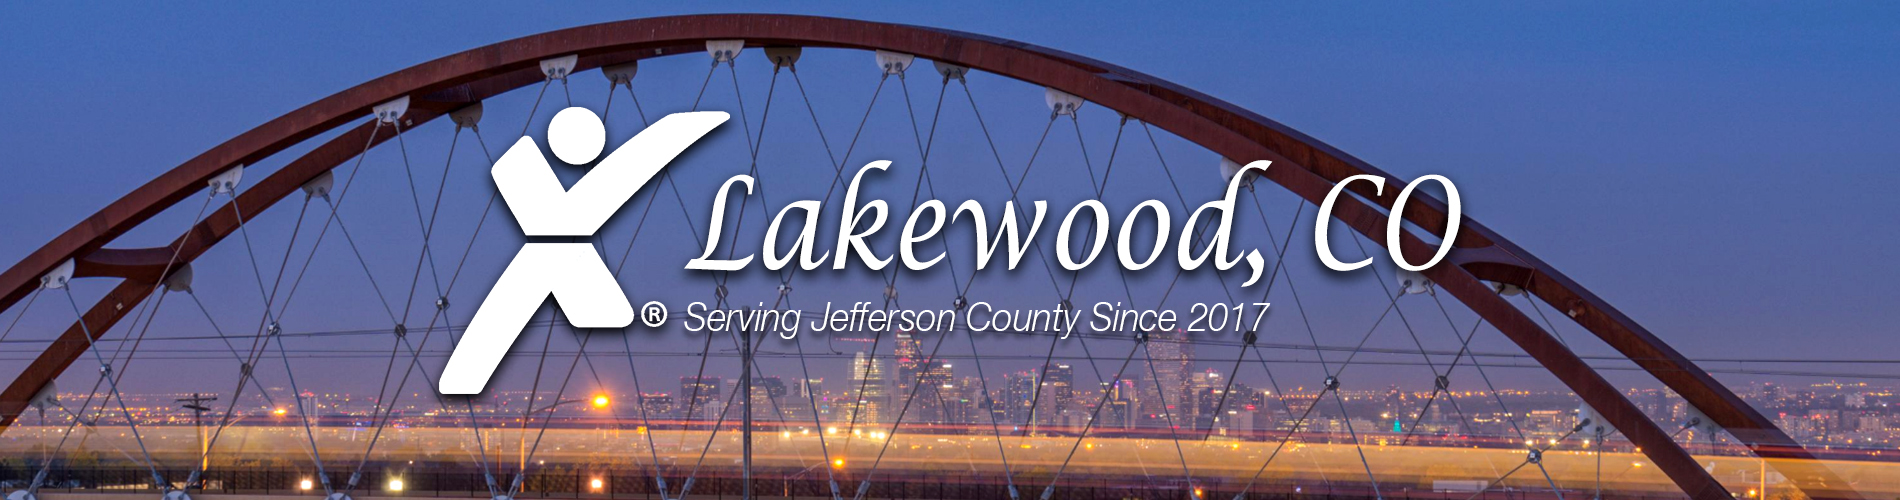 Lakewood Employment Agency | Staffing Agencies in Lakewood ...